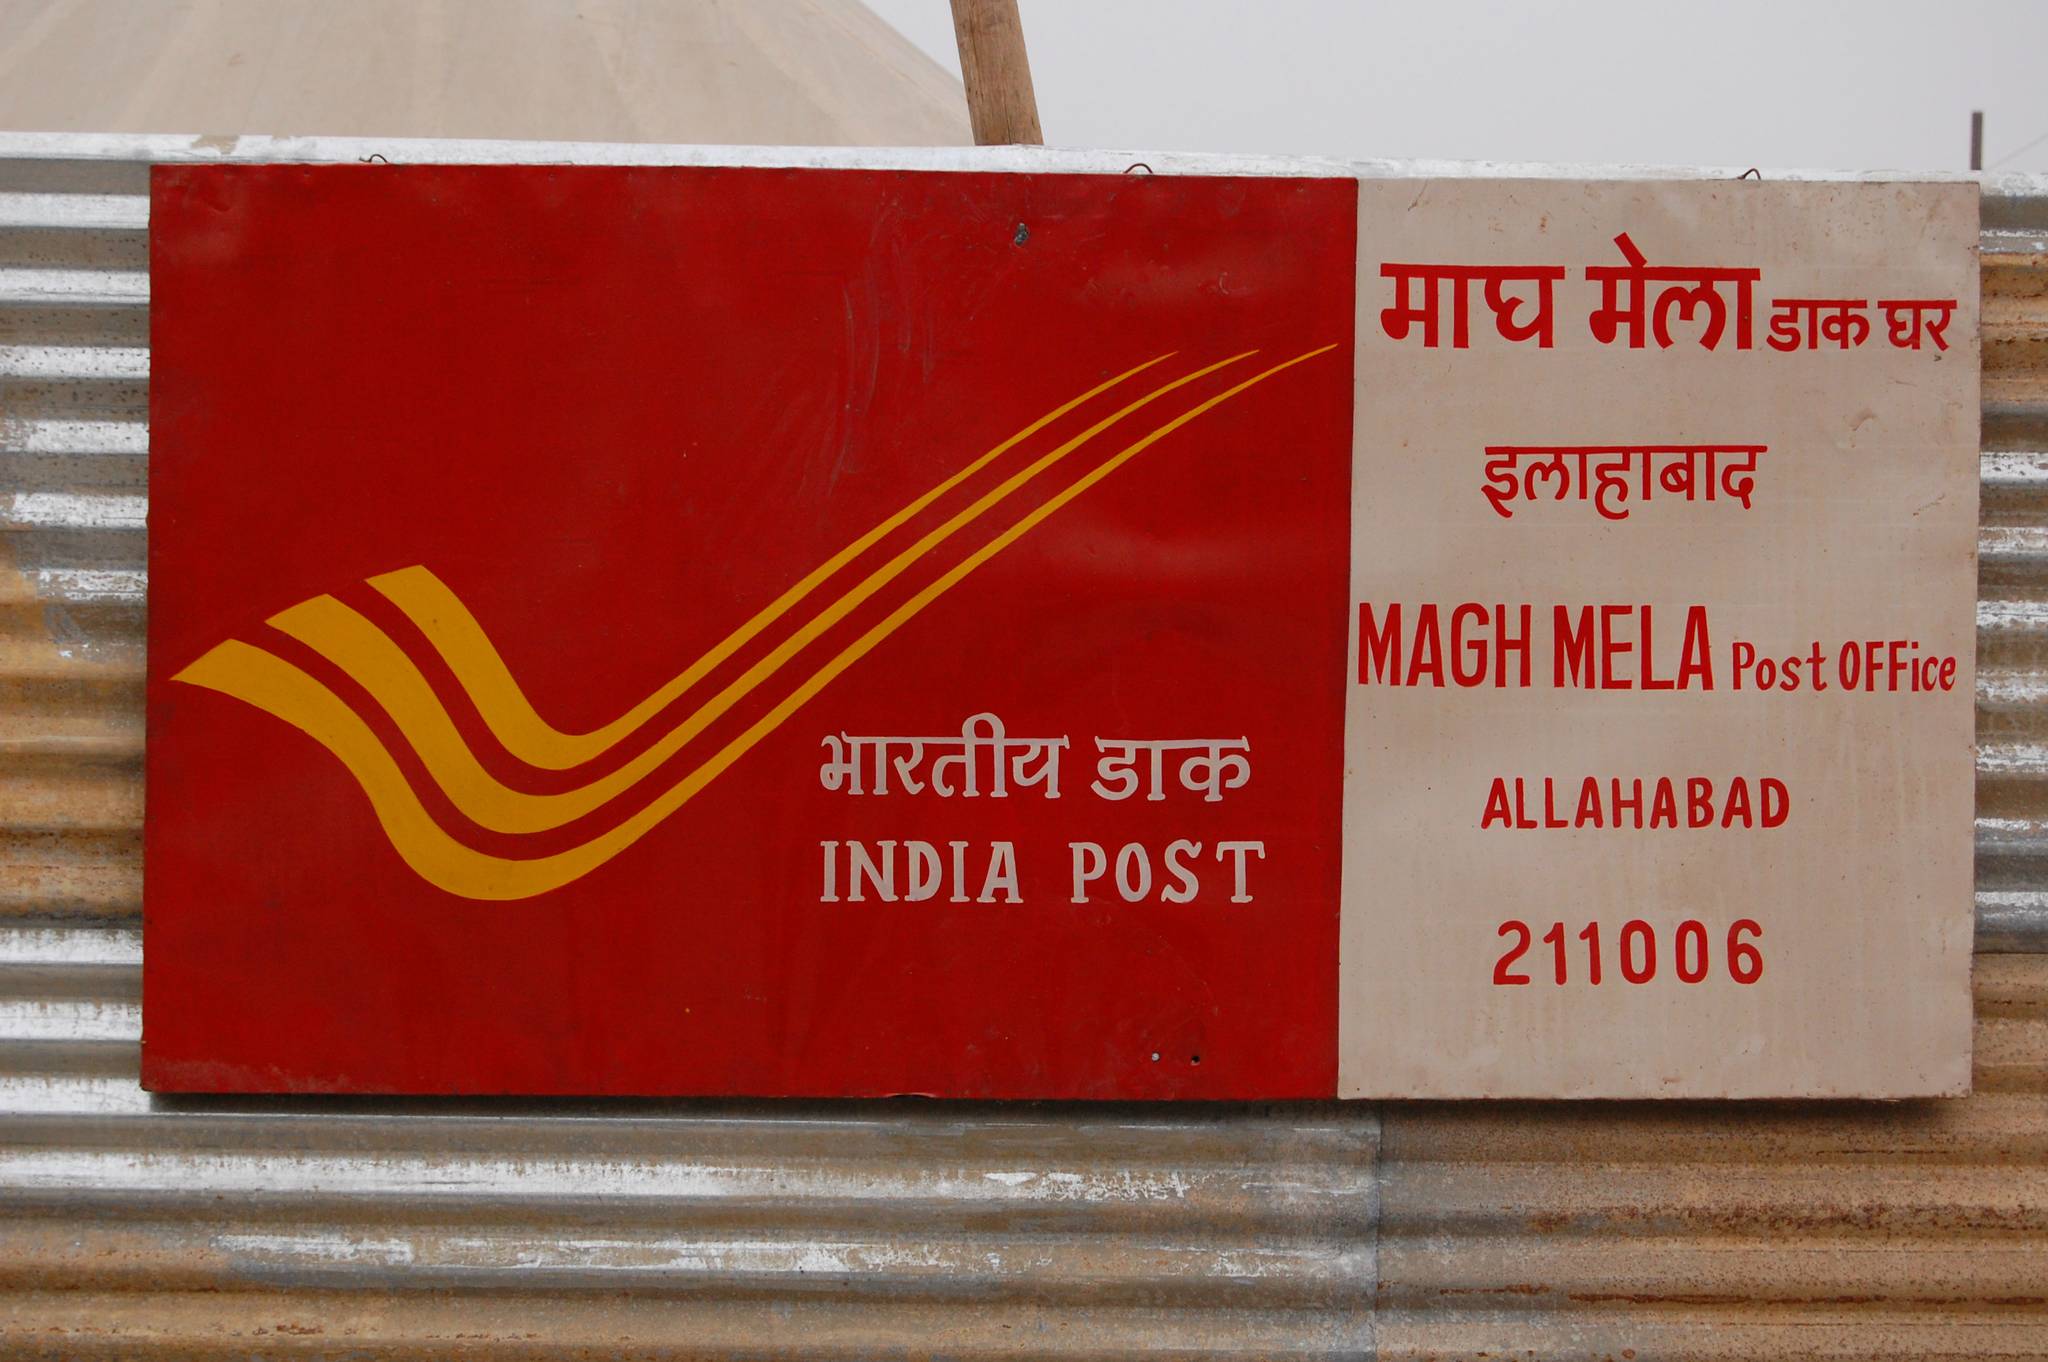 India Post launches e-commerce delivery centre